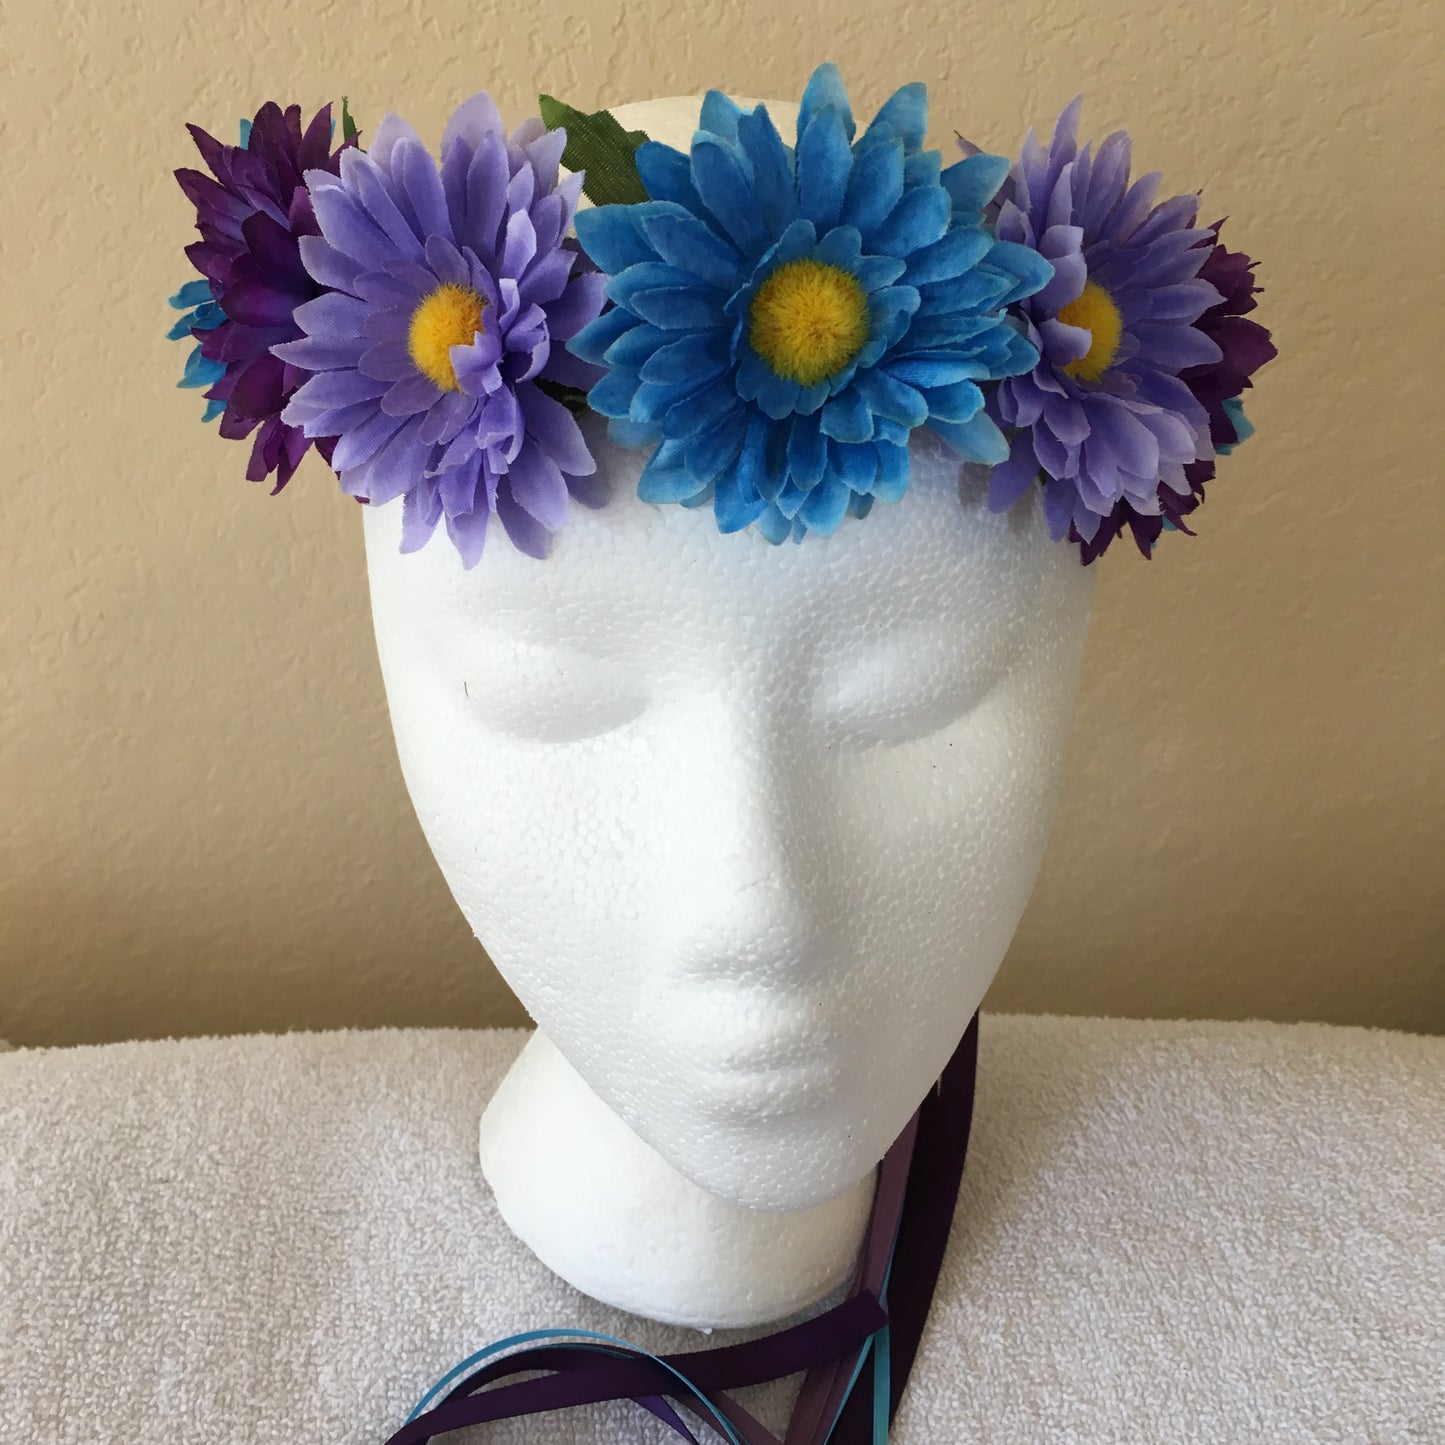 Small Wreath - Blue & purple daisies